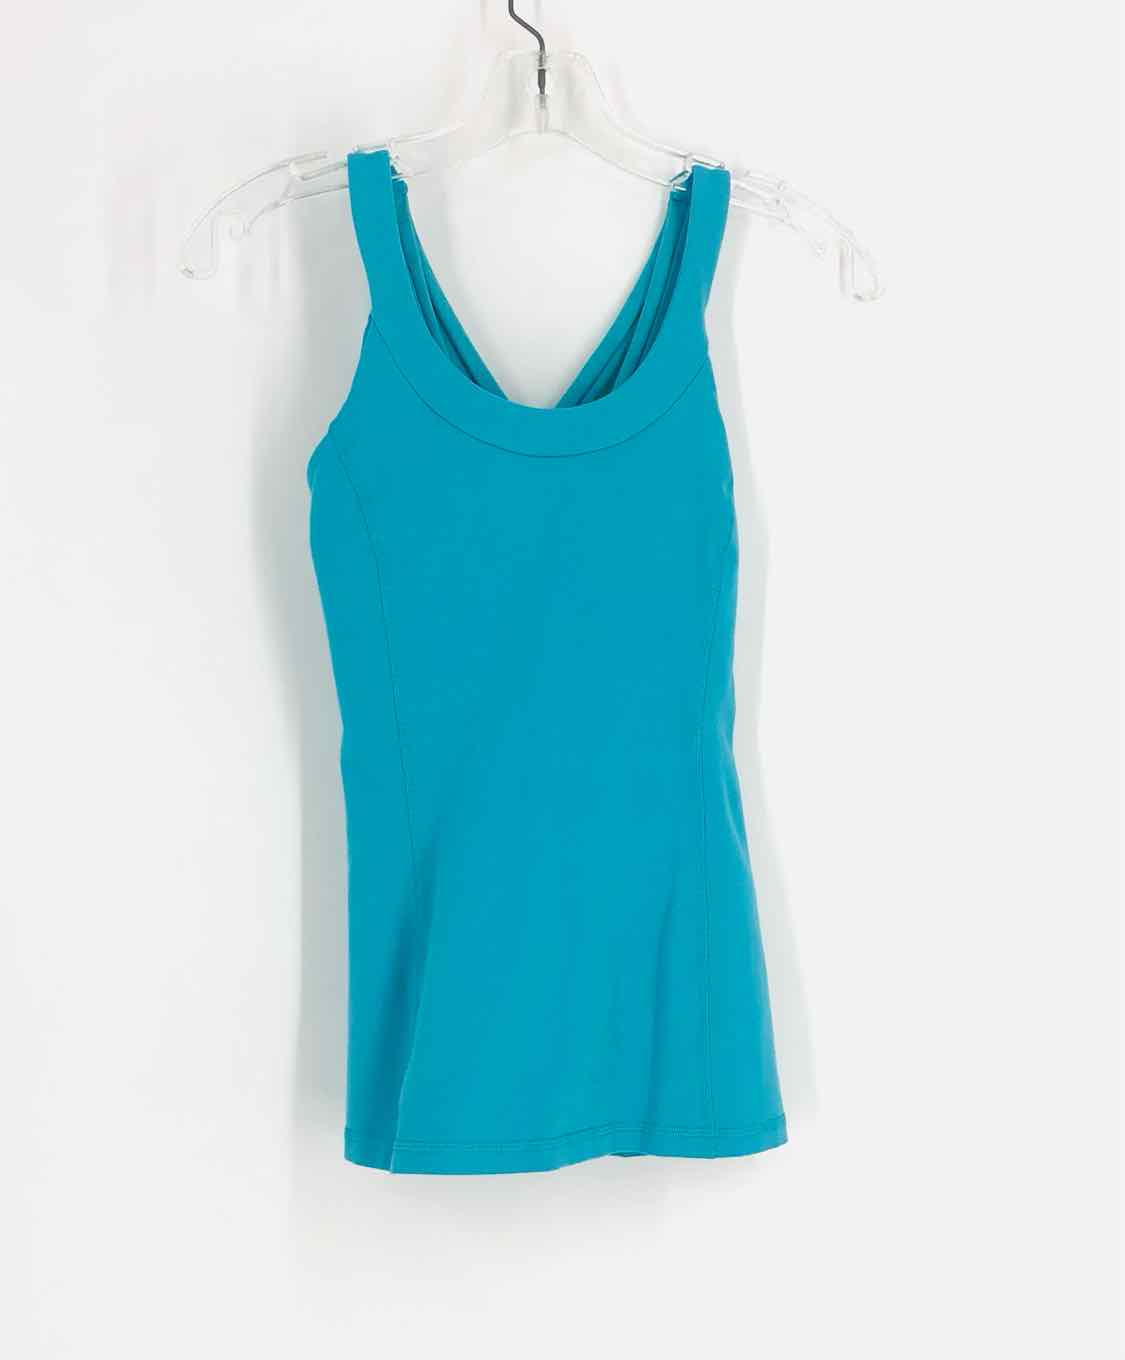 Lululemon Athletica Size 6 Turquoise Solid Activewear Top-Sleeveless ...